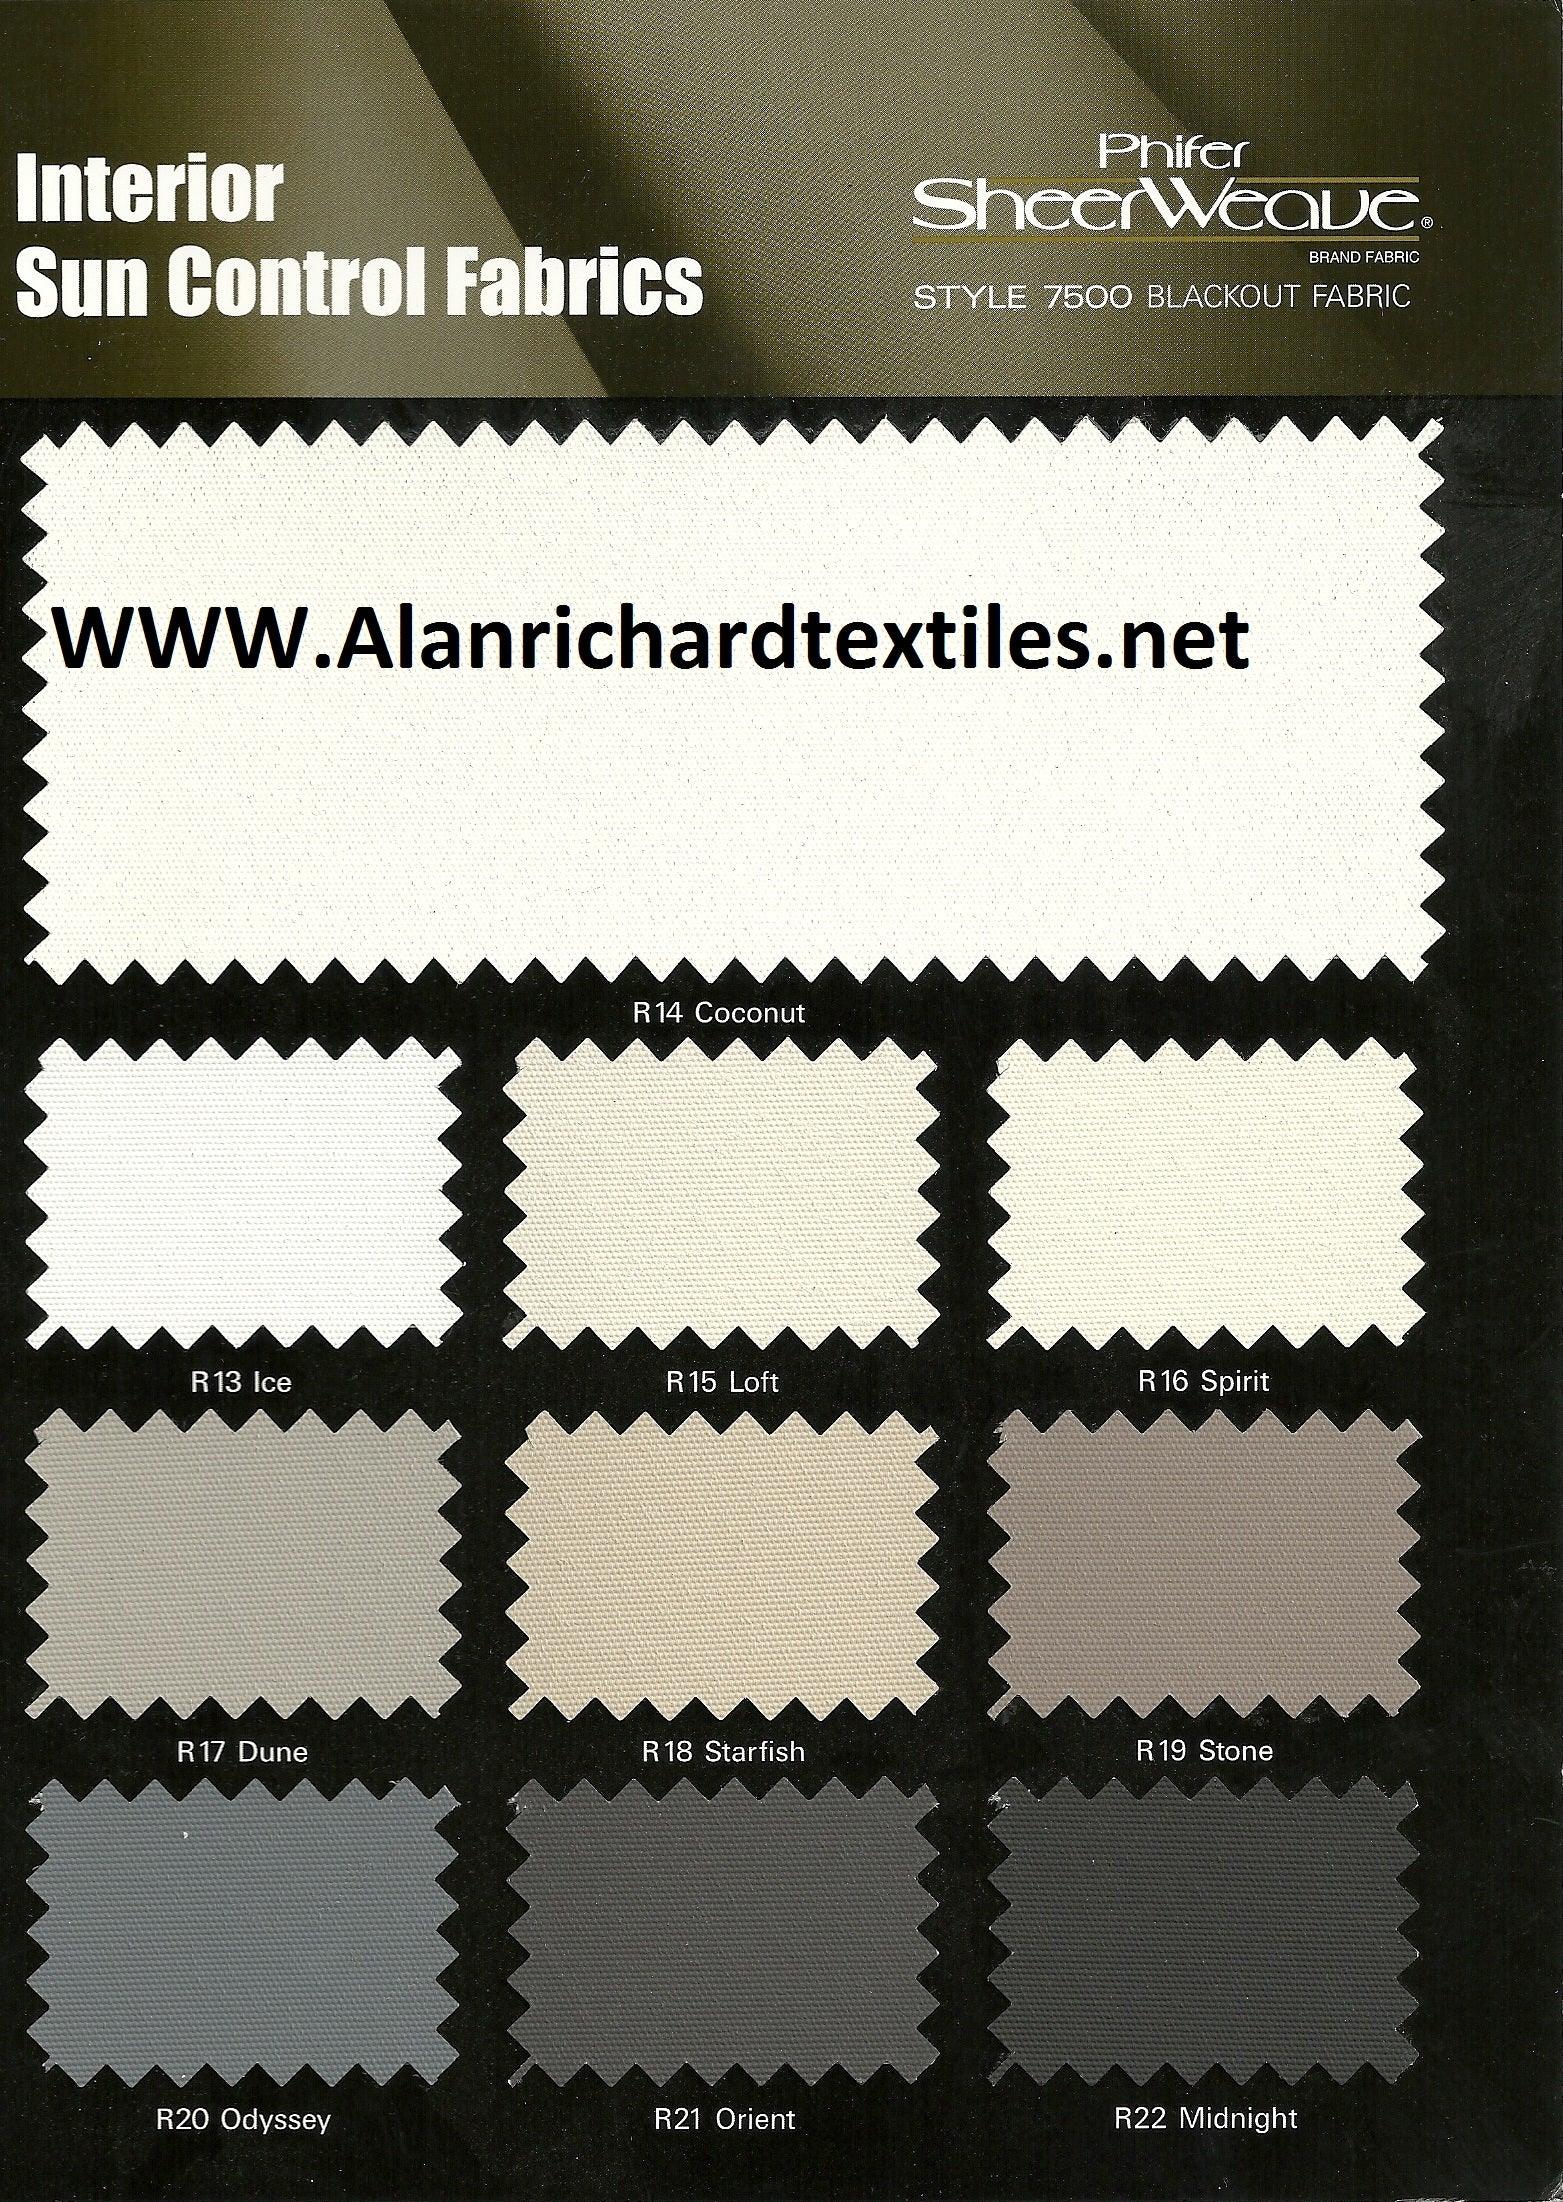 37-48"(Width) 7500 SheerWeave® Series - Alan Richard Textiles, LTD 7500 Phifer SheerWeave� Series (blackout)